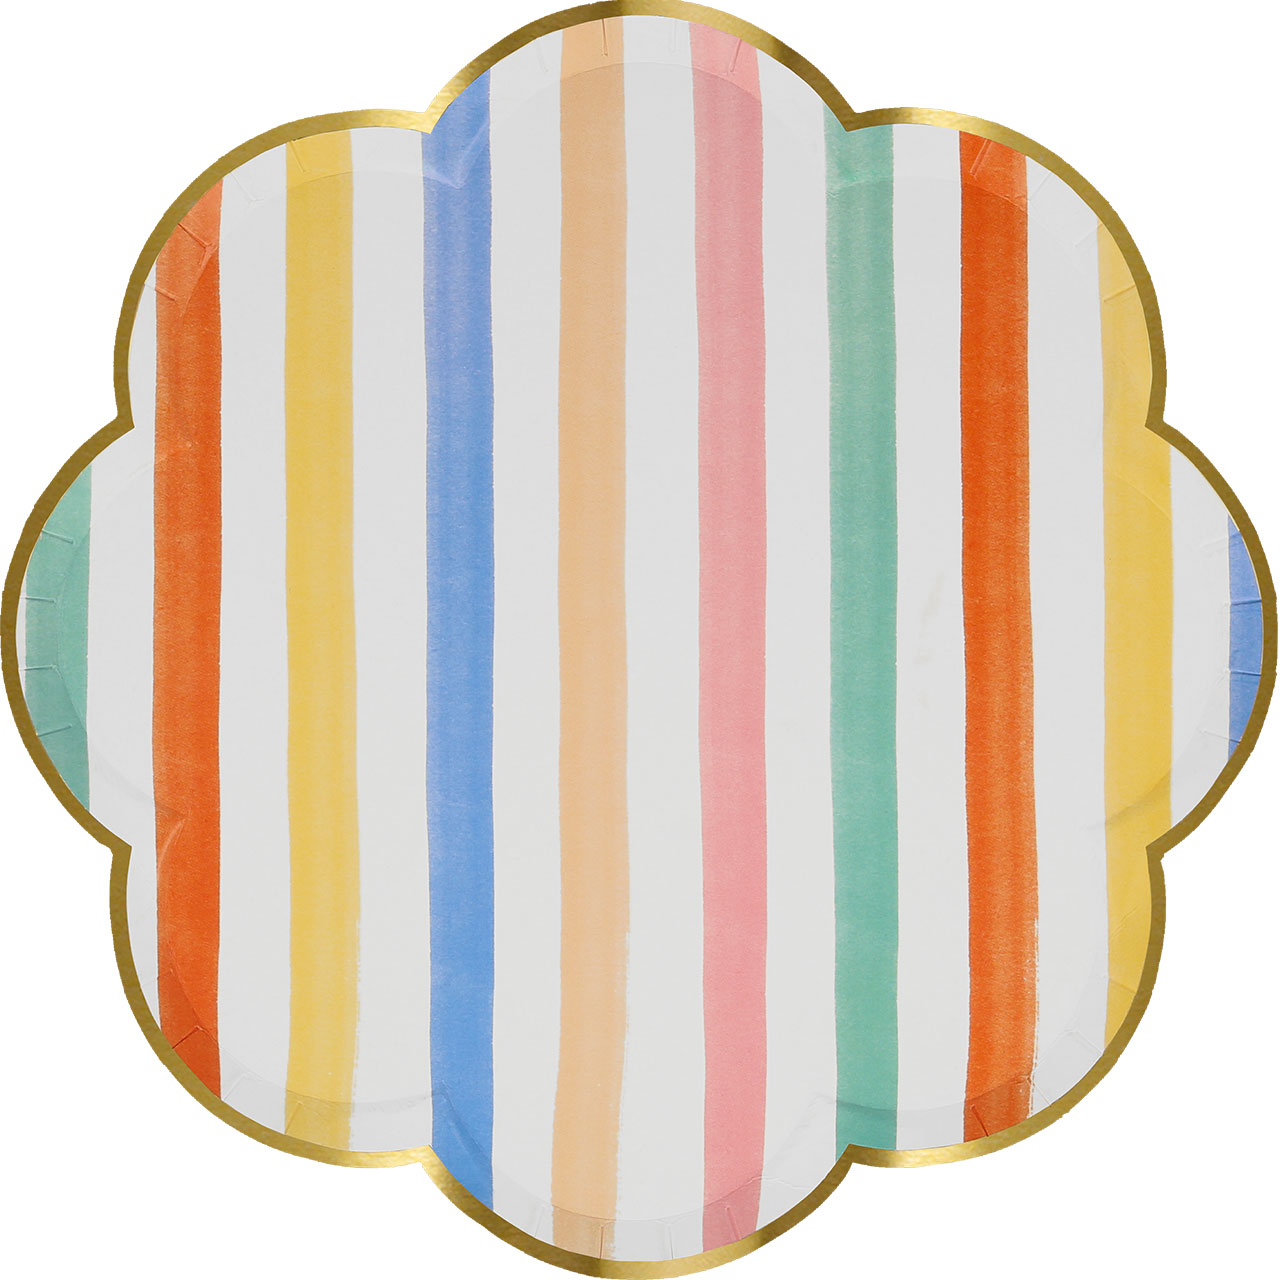 Plates - Colorful Patterns (L)